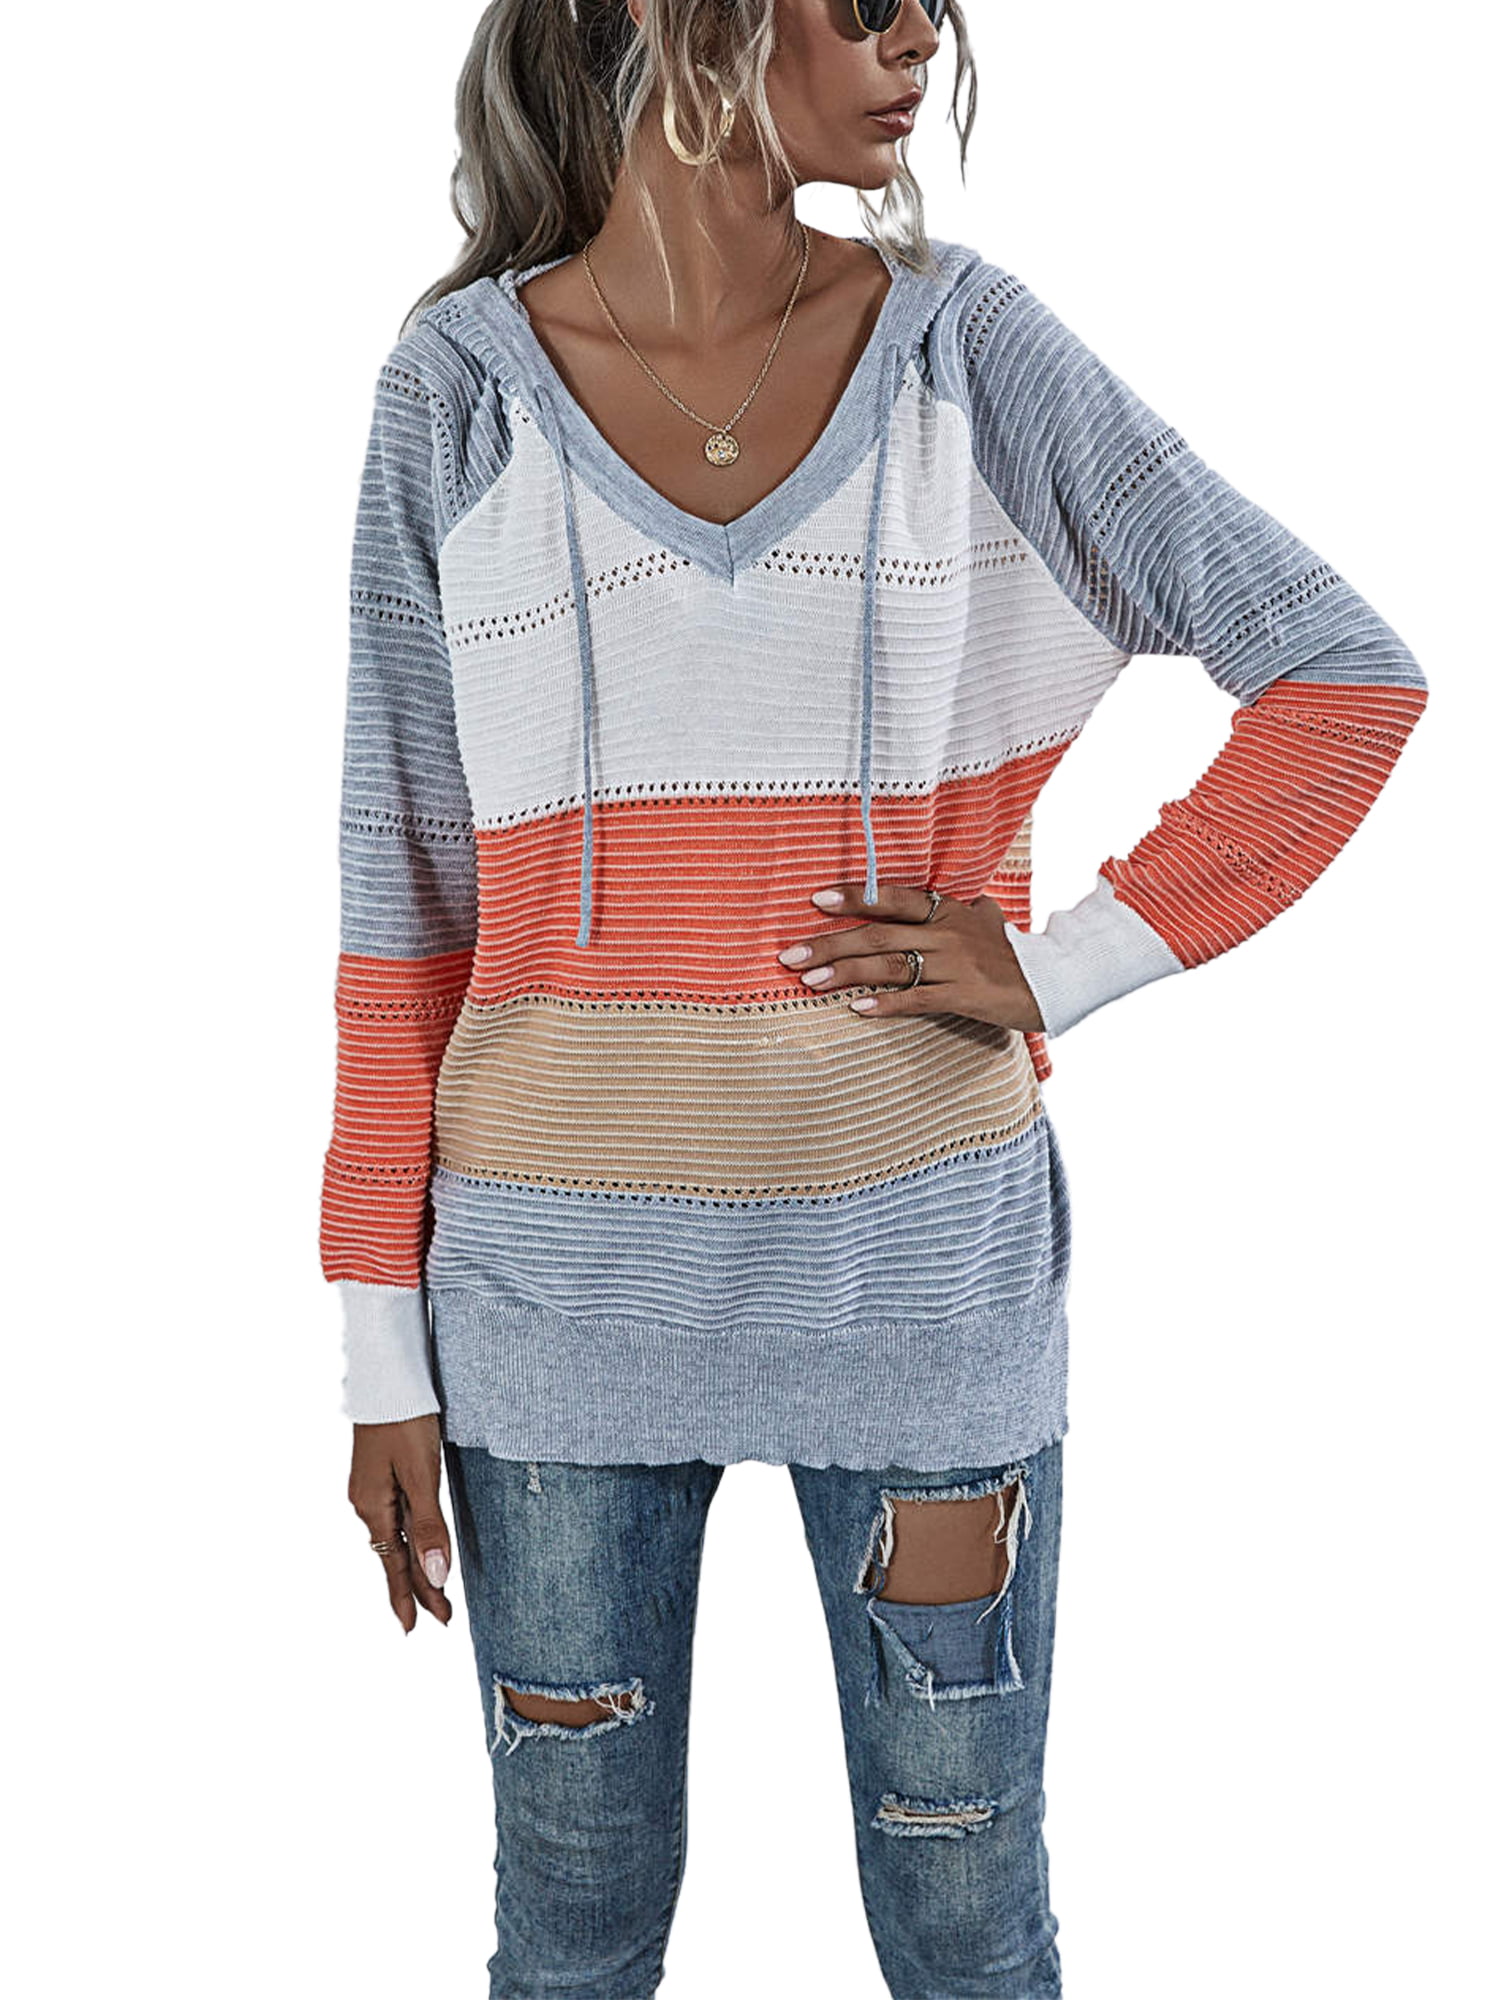 Casual Knitted Striped Hoodies Sweatshirt For Women Long Sleeve ...